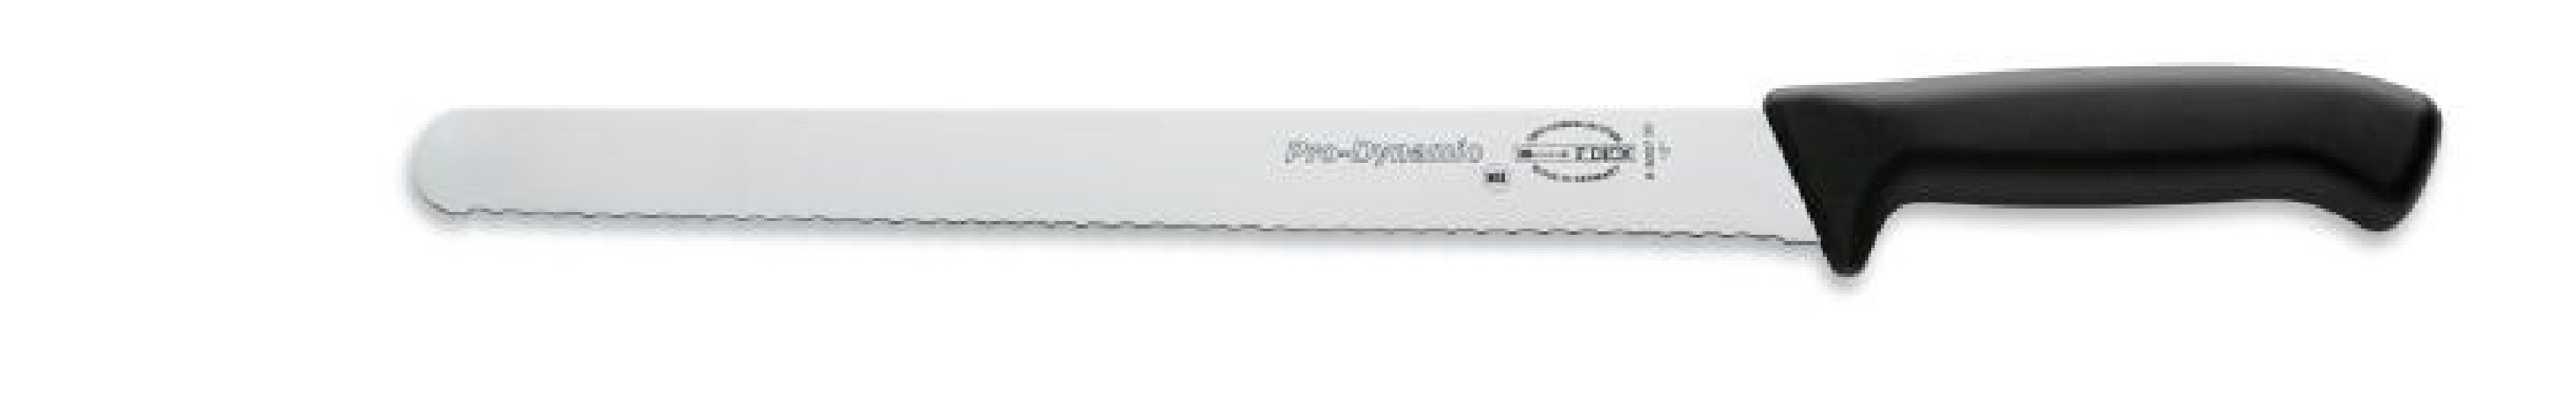 Dick Dick cm 30 Aufschnittmesser Klinge Kochmesser 8503730 ProDynamik Wellenschliff Messer